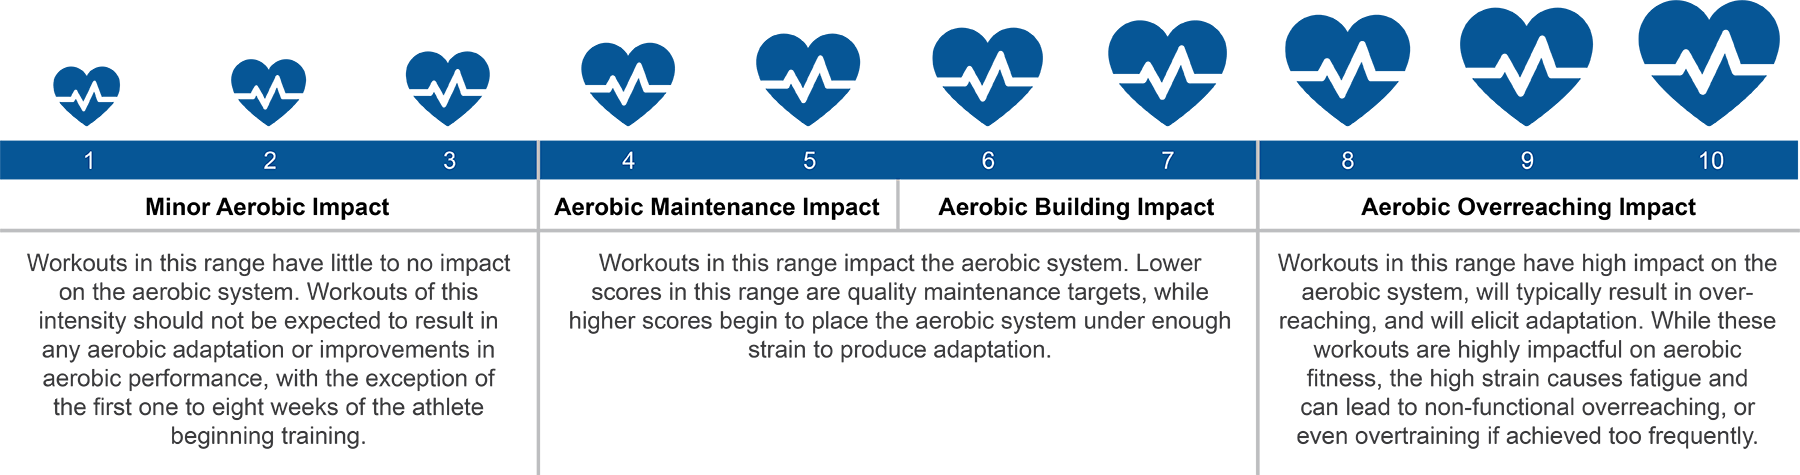 aerobic training impact score in wko5 tis